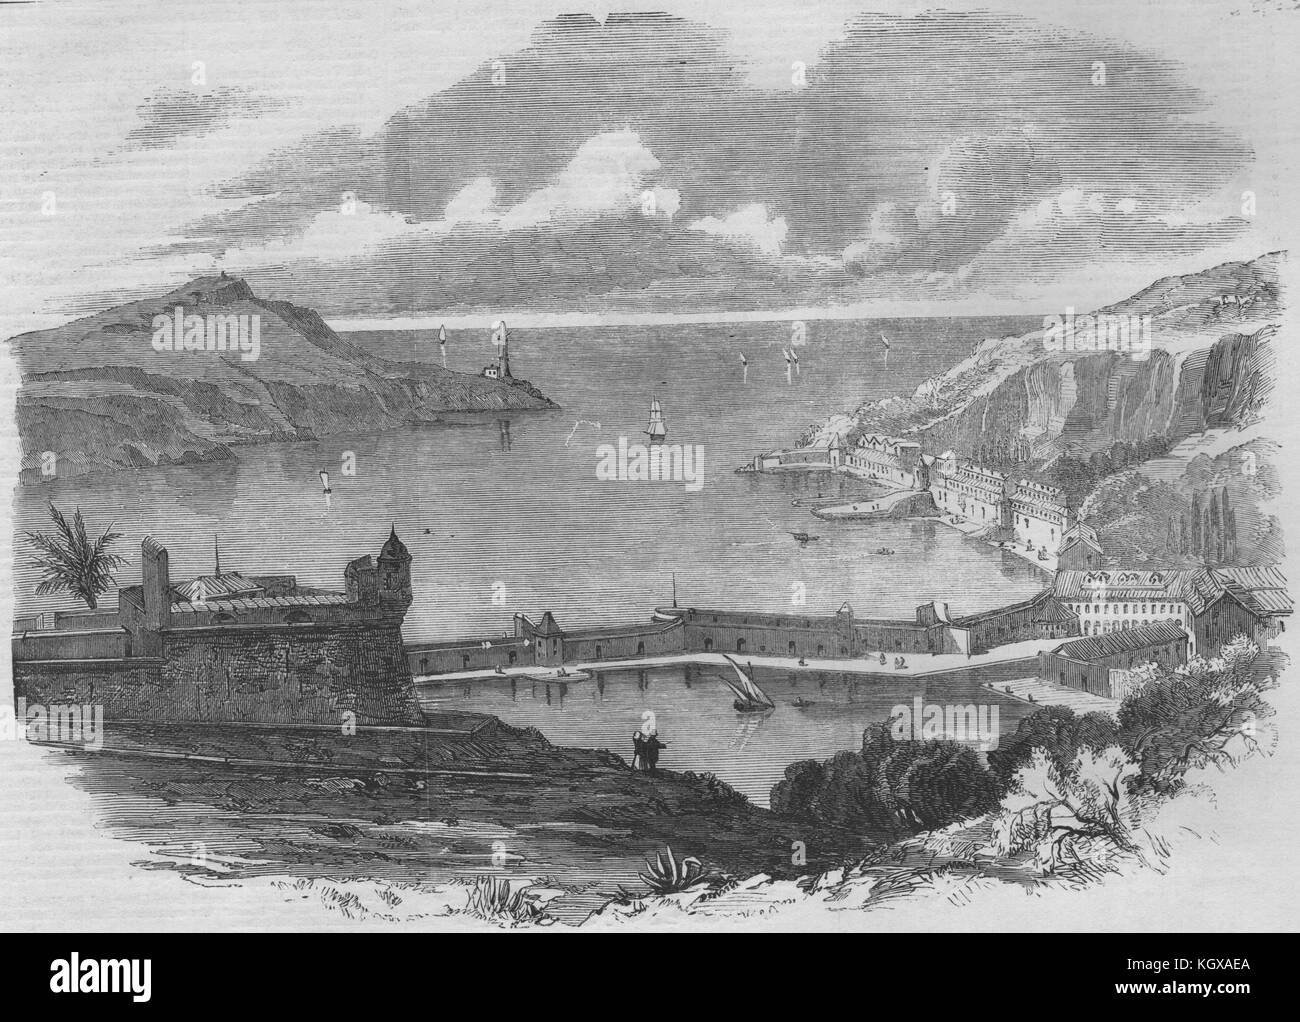 Villafranca.Villefranche-sur-Mer. Alpes-Maritimes 1858. The Illustrated London News Stock Photo